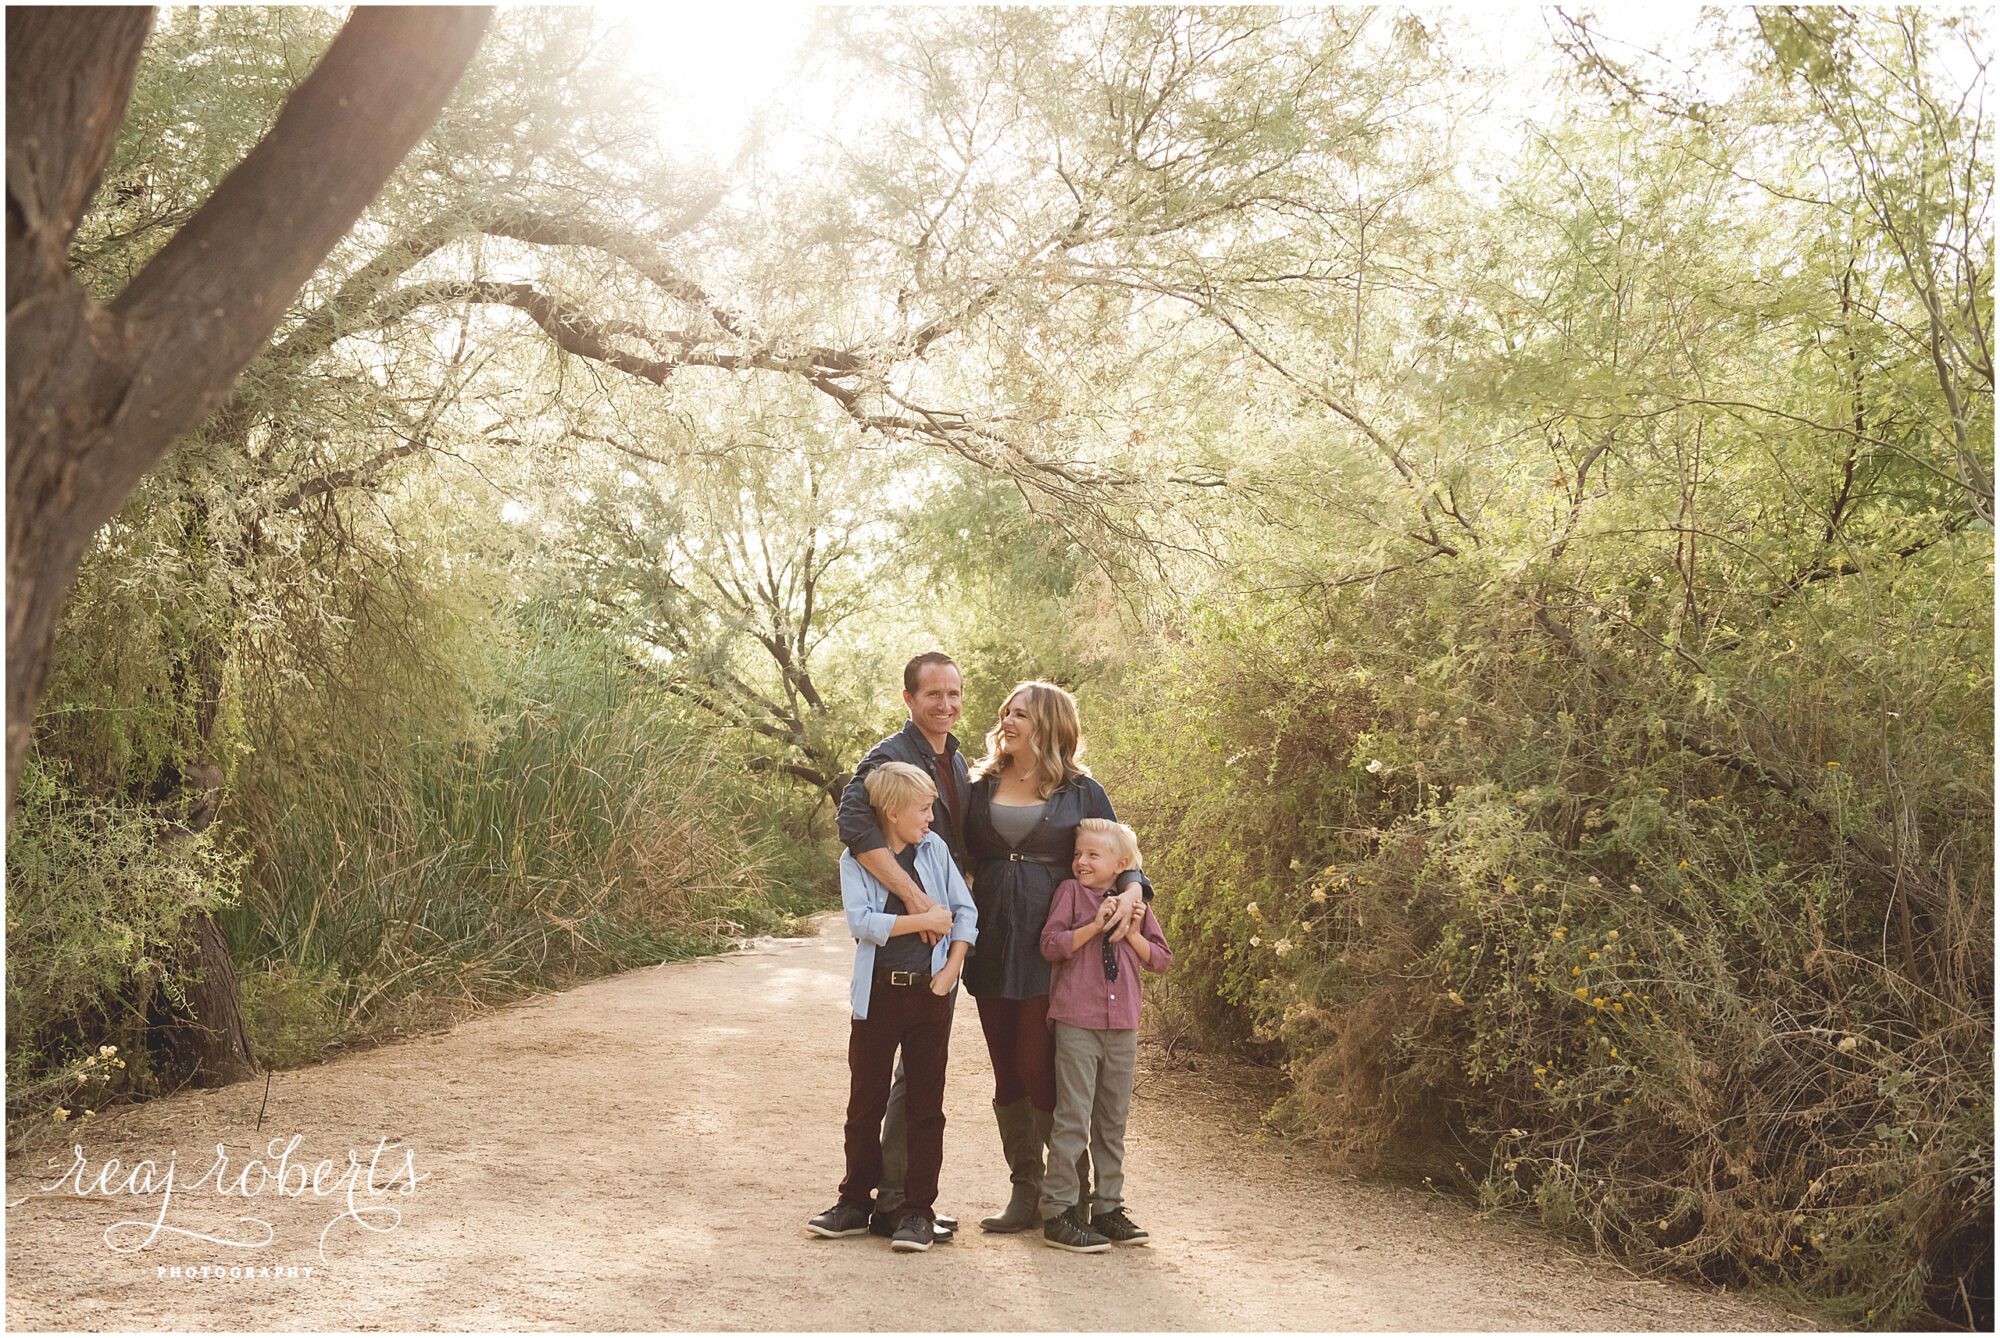 Family Photos at the Riparian Reserve | Gilbert, AZ Family Photographer | Reaj Roberts Photography